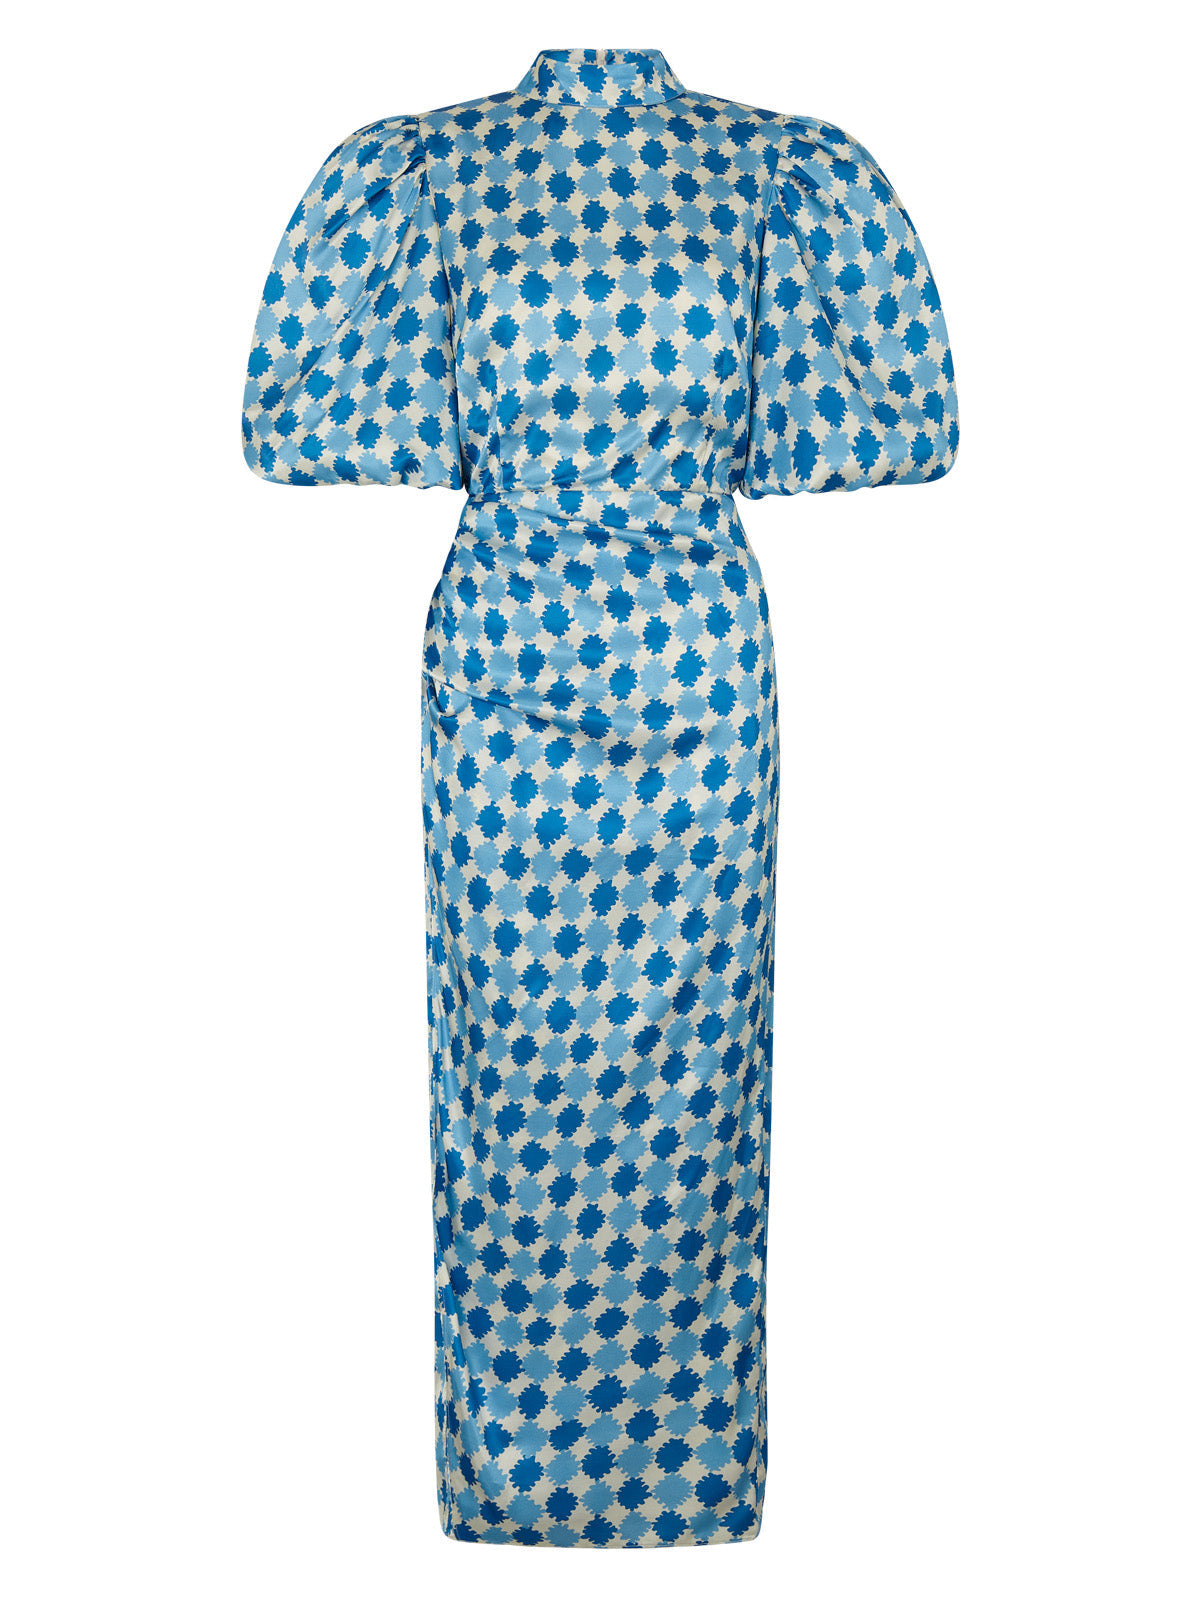 Annabelle Blue Picnic Check Dress By KITRI Studio